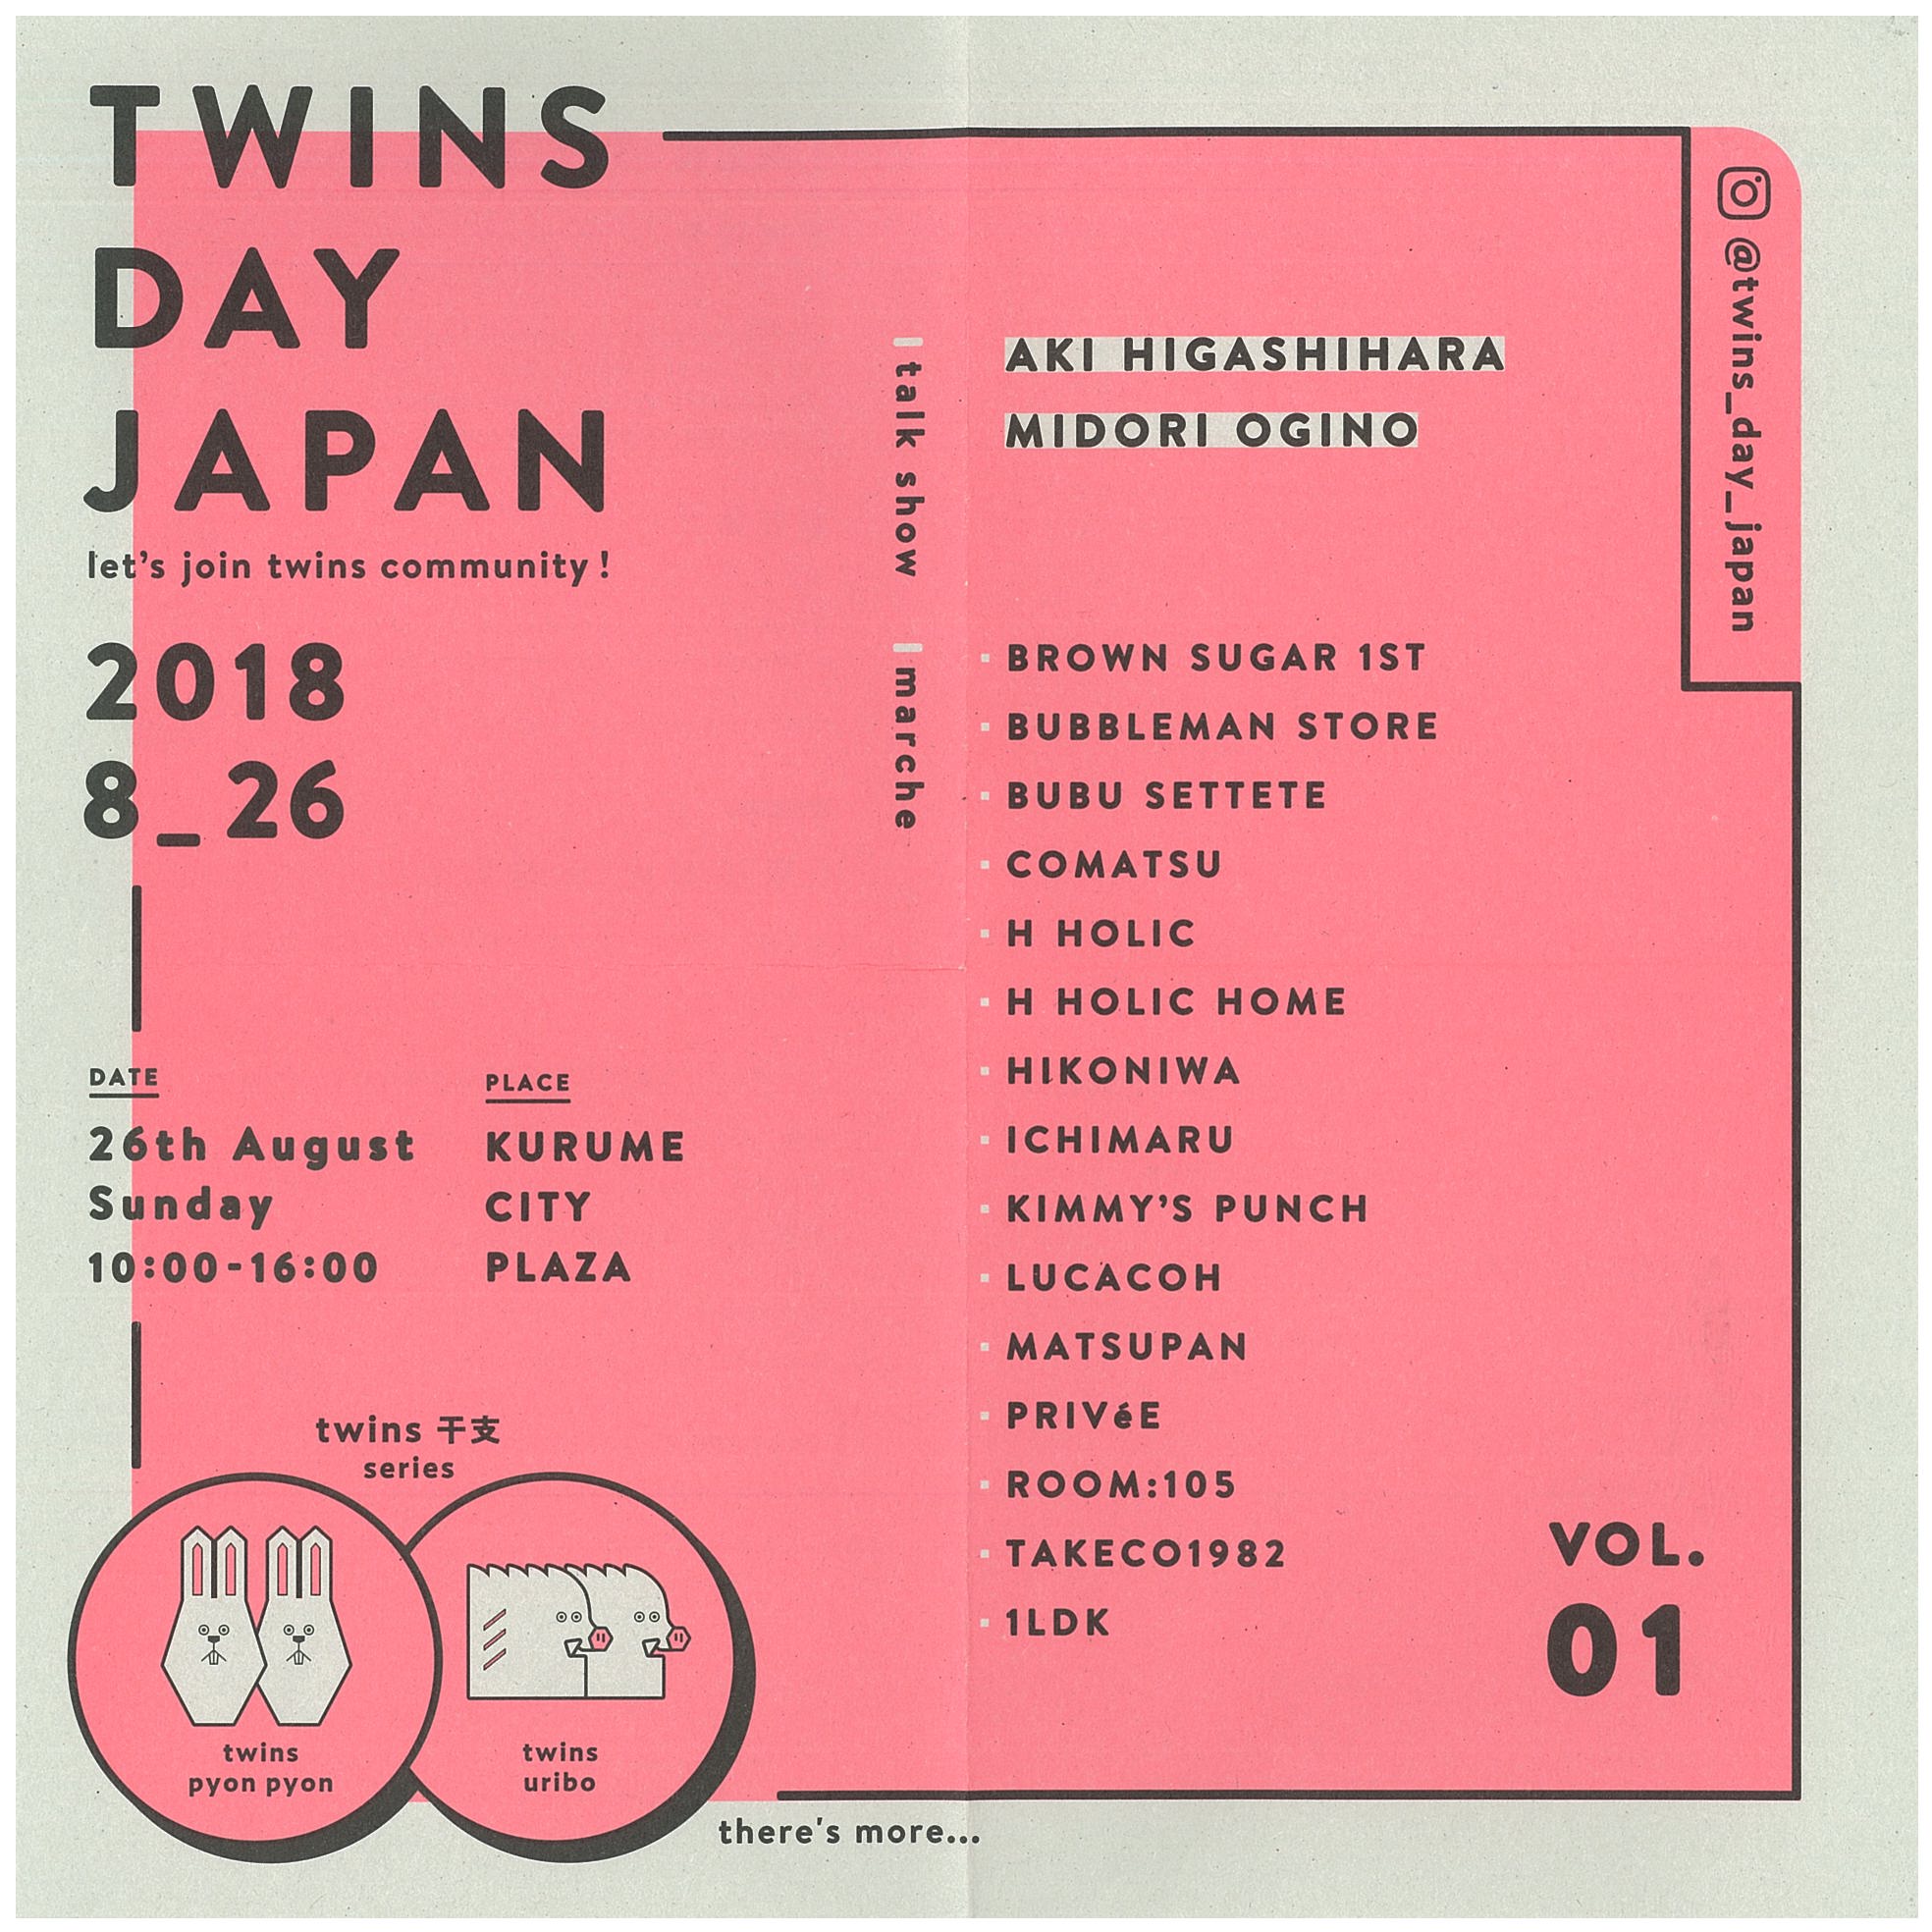 TWINS  DAY  JAPAN  2018